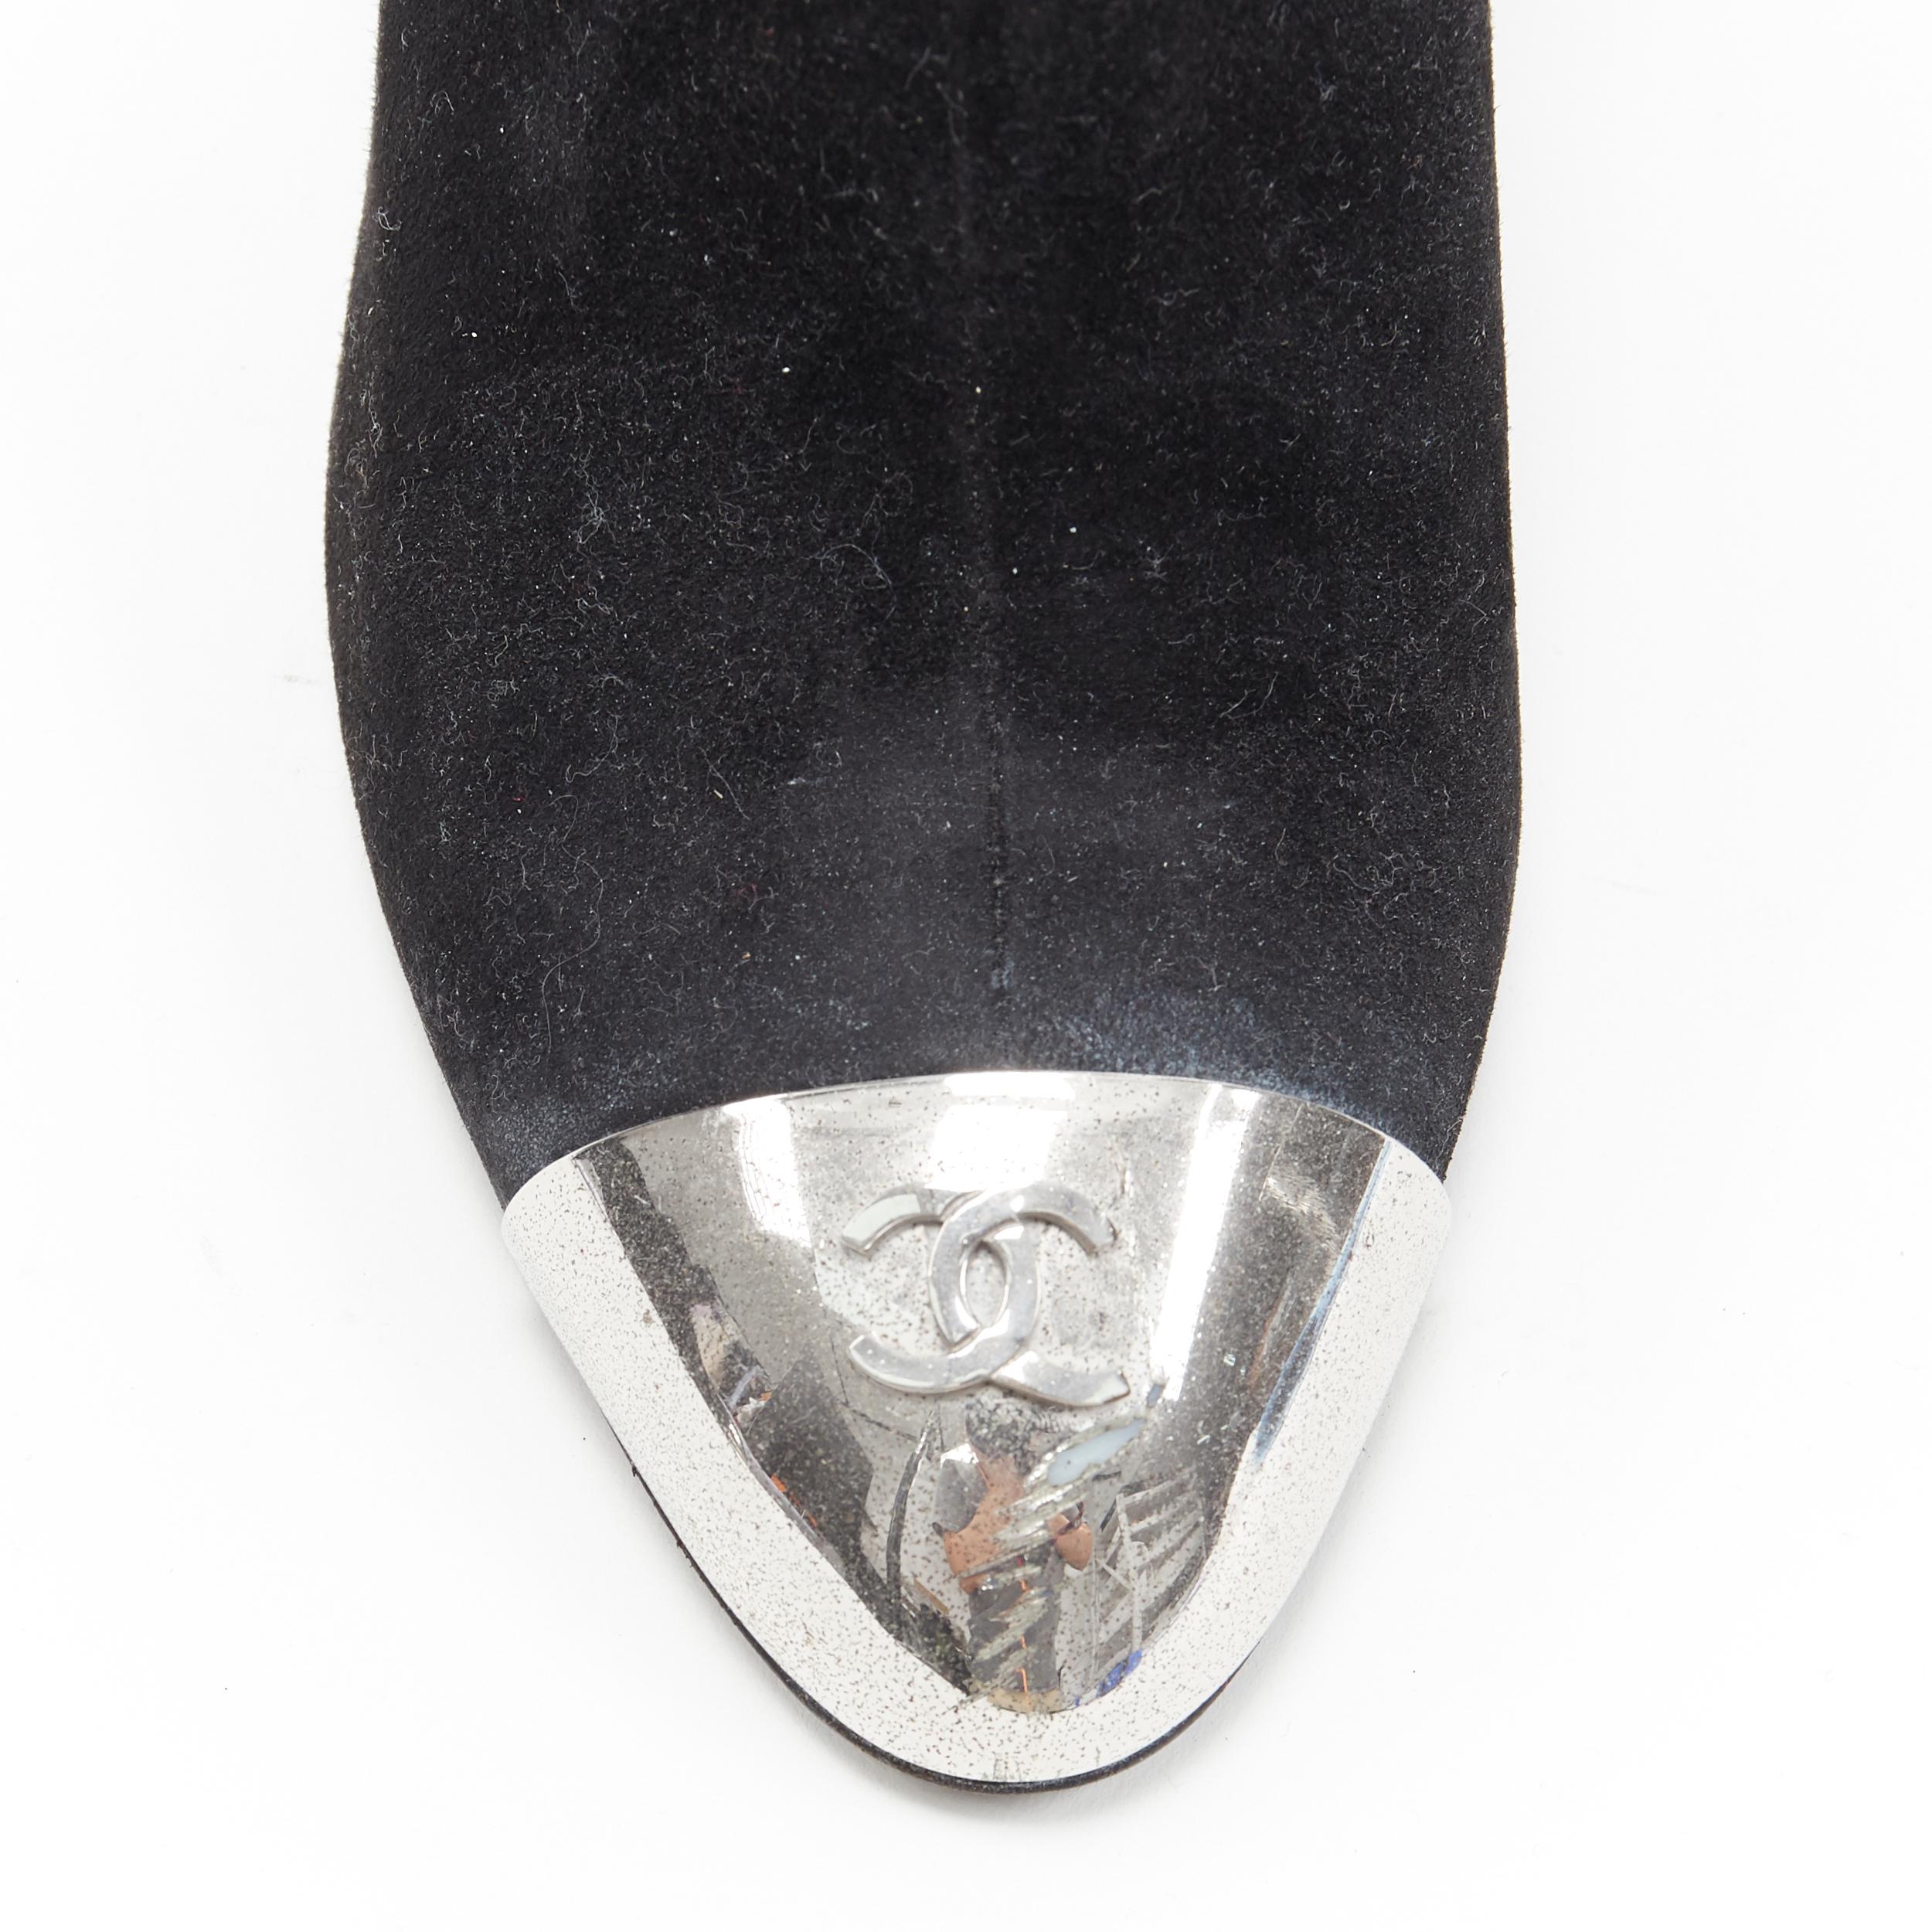 CHANEL black suede silver CC metal toe cap high heel ankle bootie EU37.5
